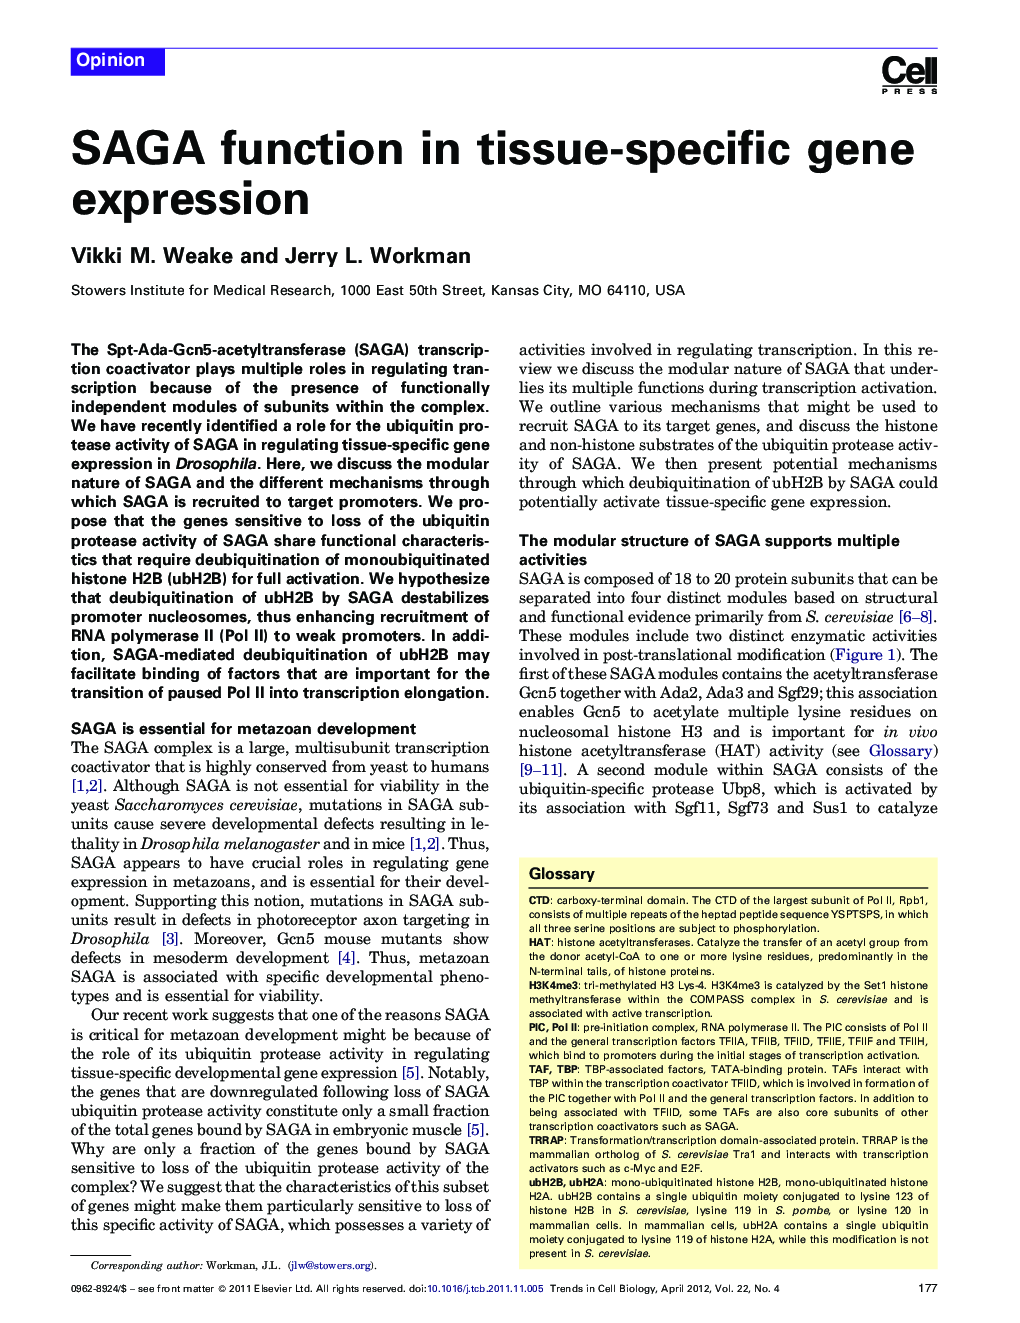 SAGA function in tissue-specific gene expression